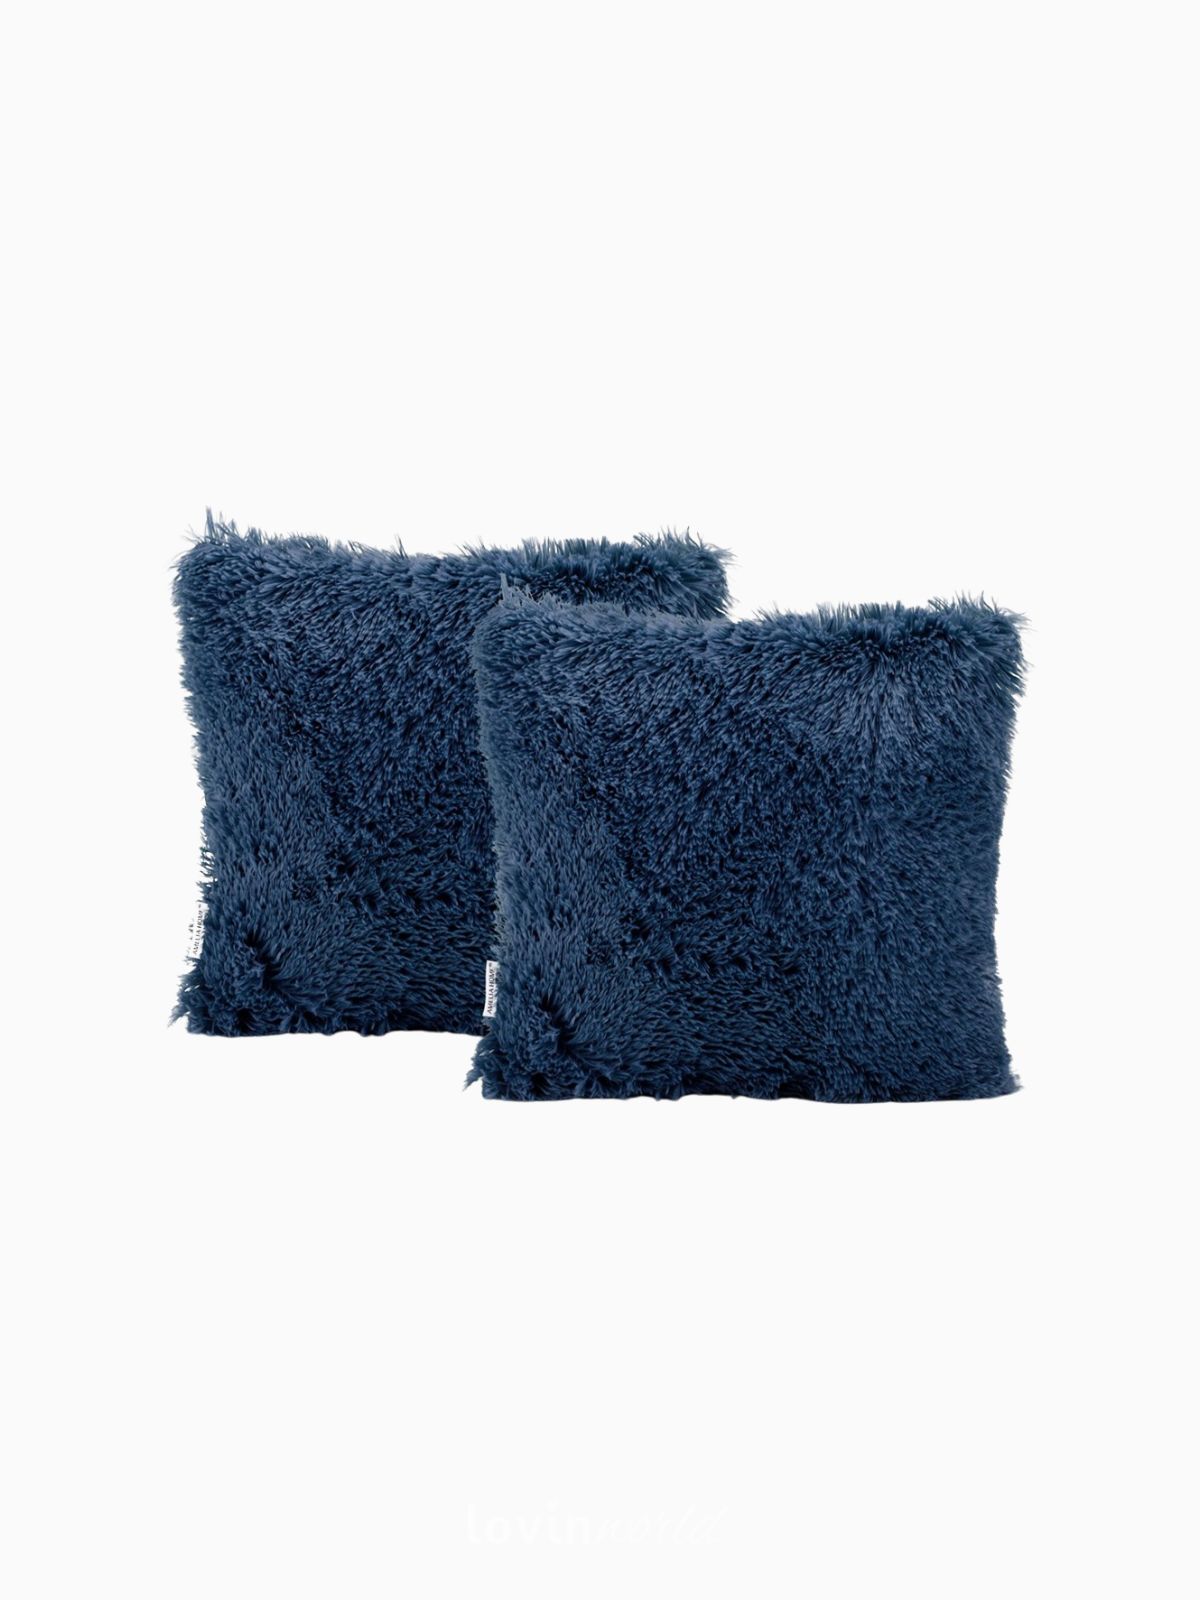 2 Federe per cuscino Karvag in colore blu scuro 45x45 cm.-1